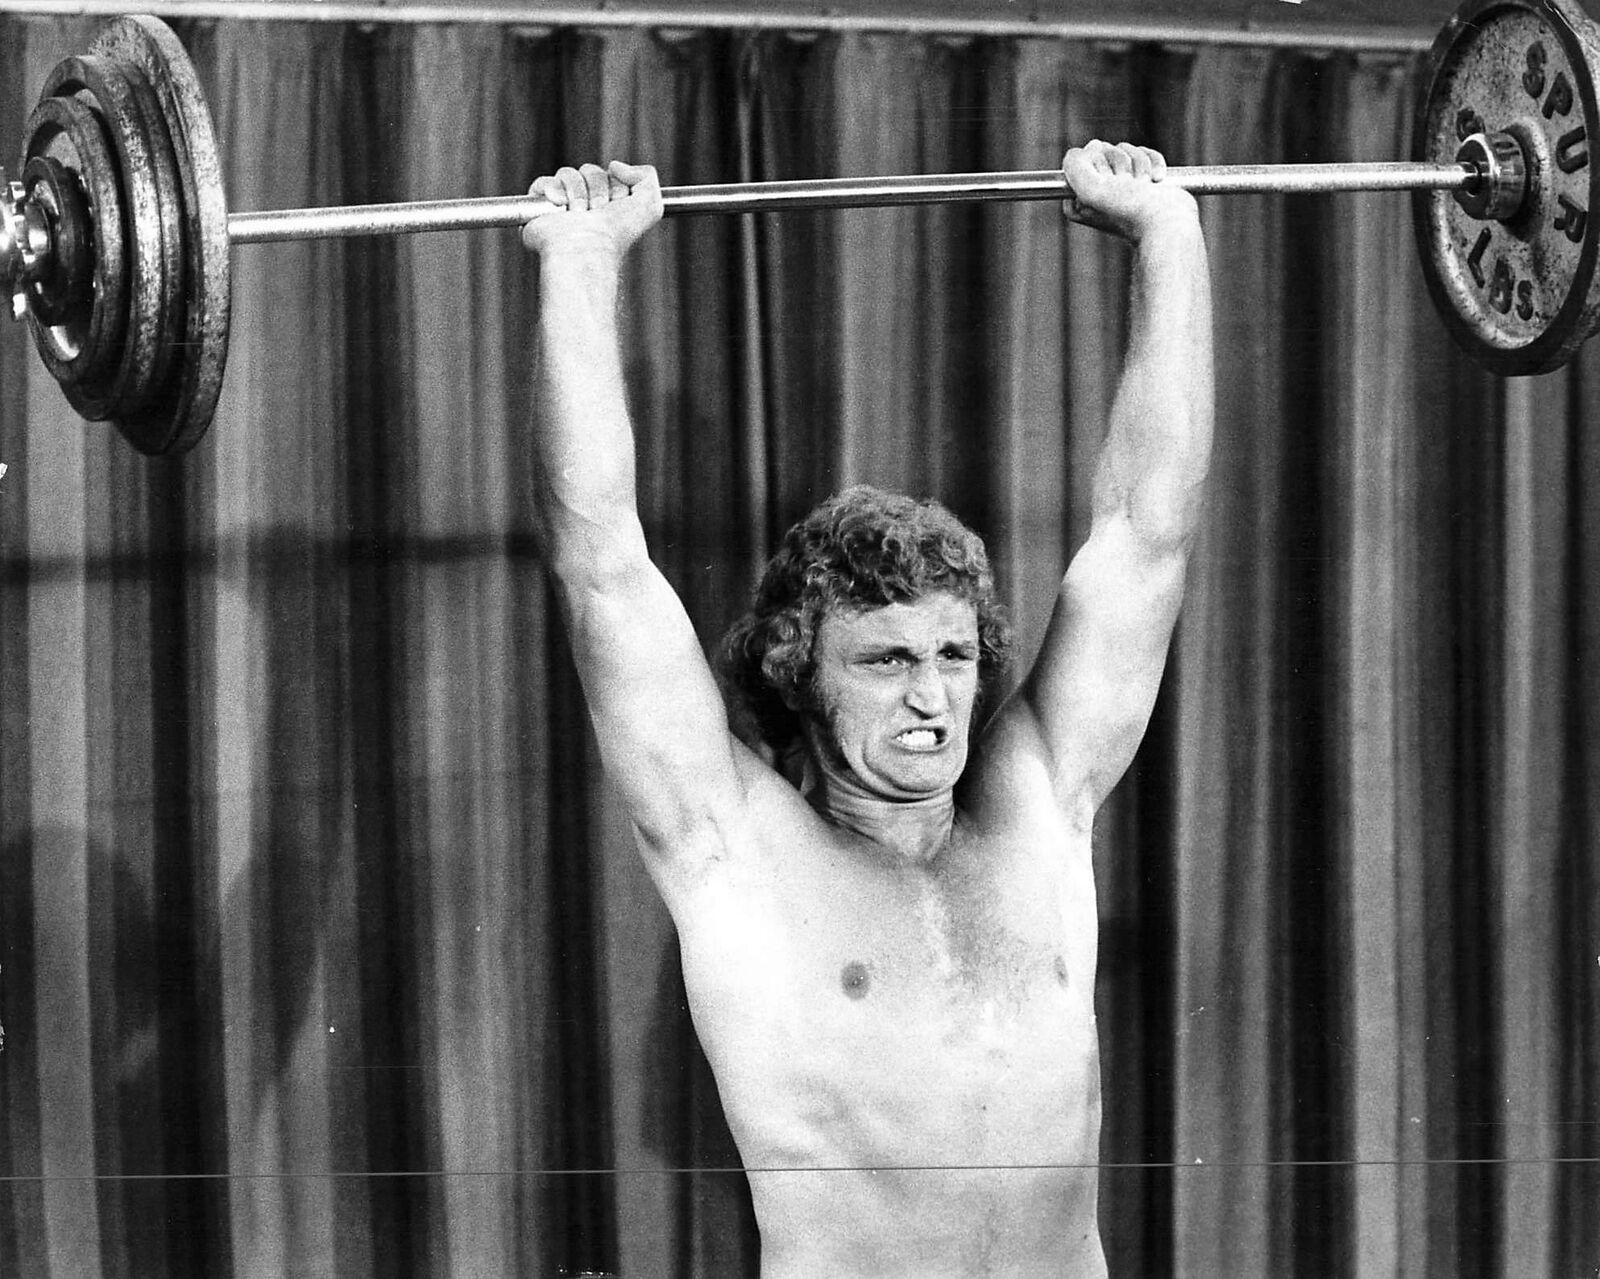 1973 Press Photo Heavyweight Boxer JOE BUGNER Weight Lifting Crystal Palace kg